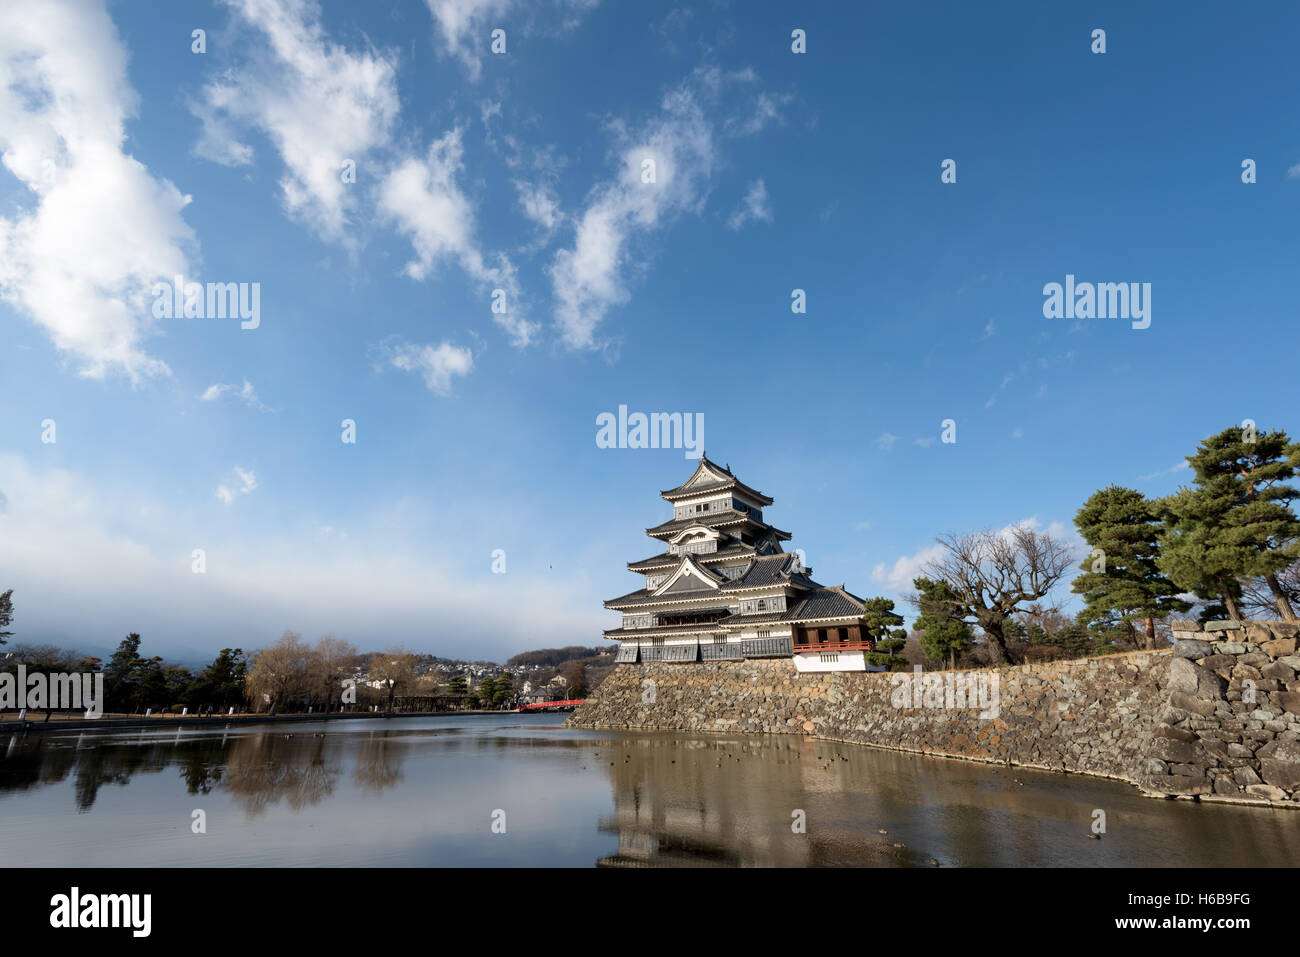 Matsumoto, Japan - December 26, 2015: Matsumoto Castle, one of Japan's premier historic castles Stock Photo